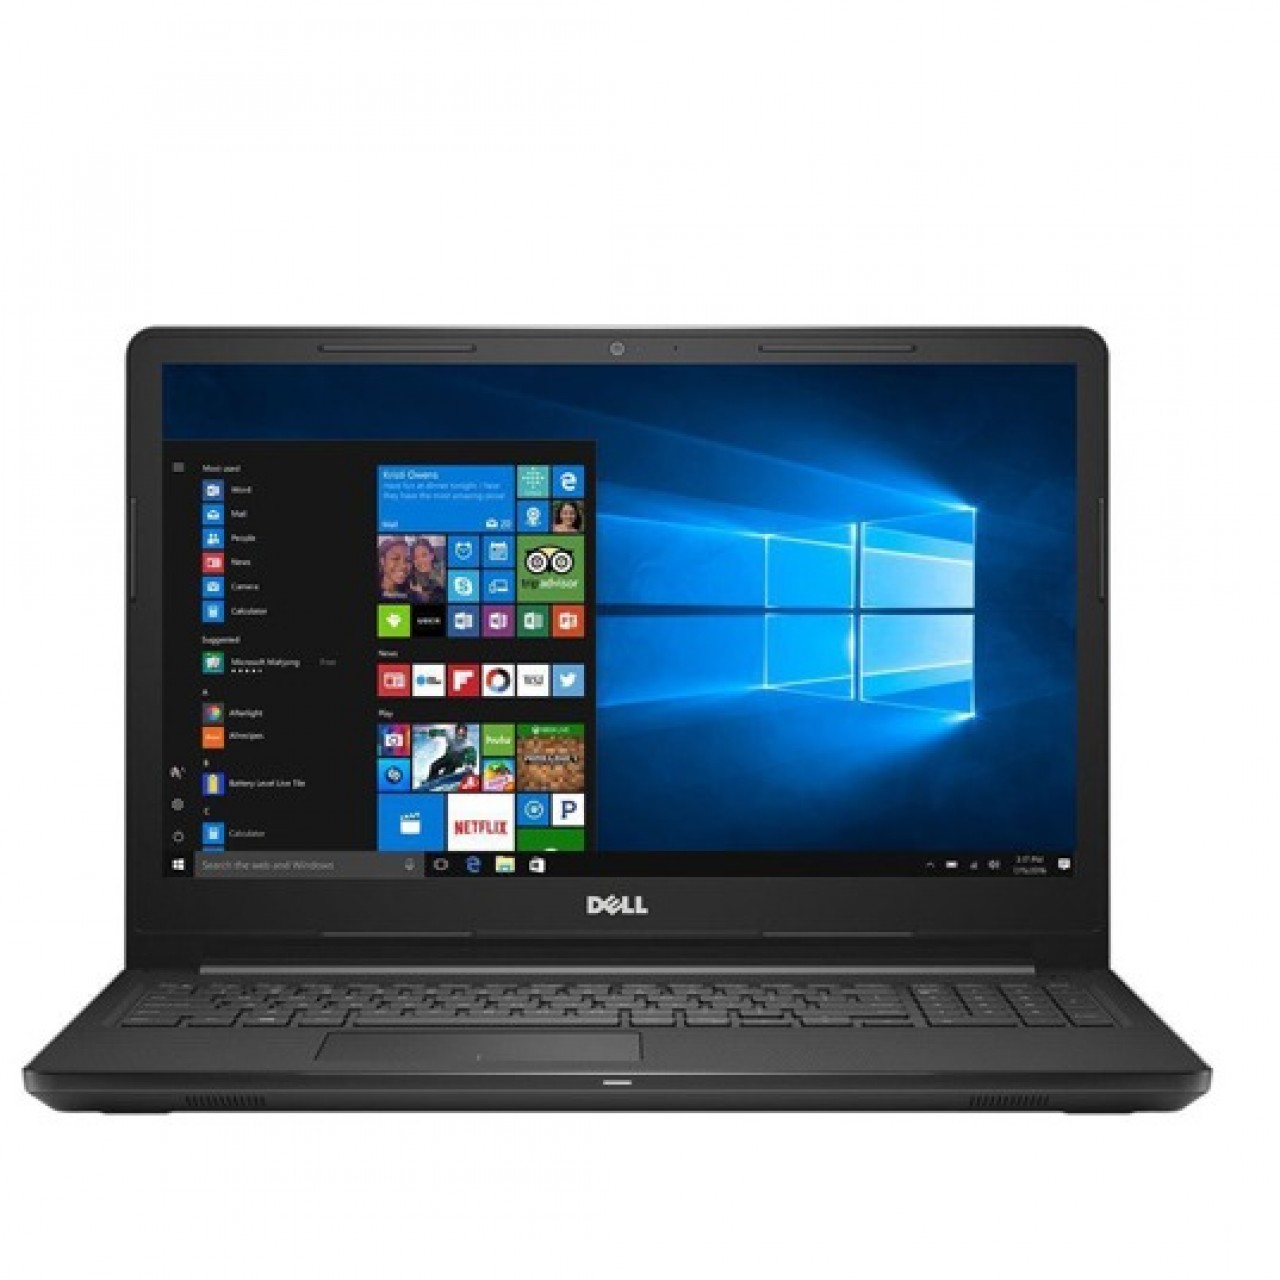 Dell Inspiron 15 3576 Laptop – 1TB ROM – 4GB RAM – Ci3 8130U Processor – 2 Years Warranty – Black